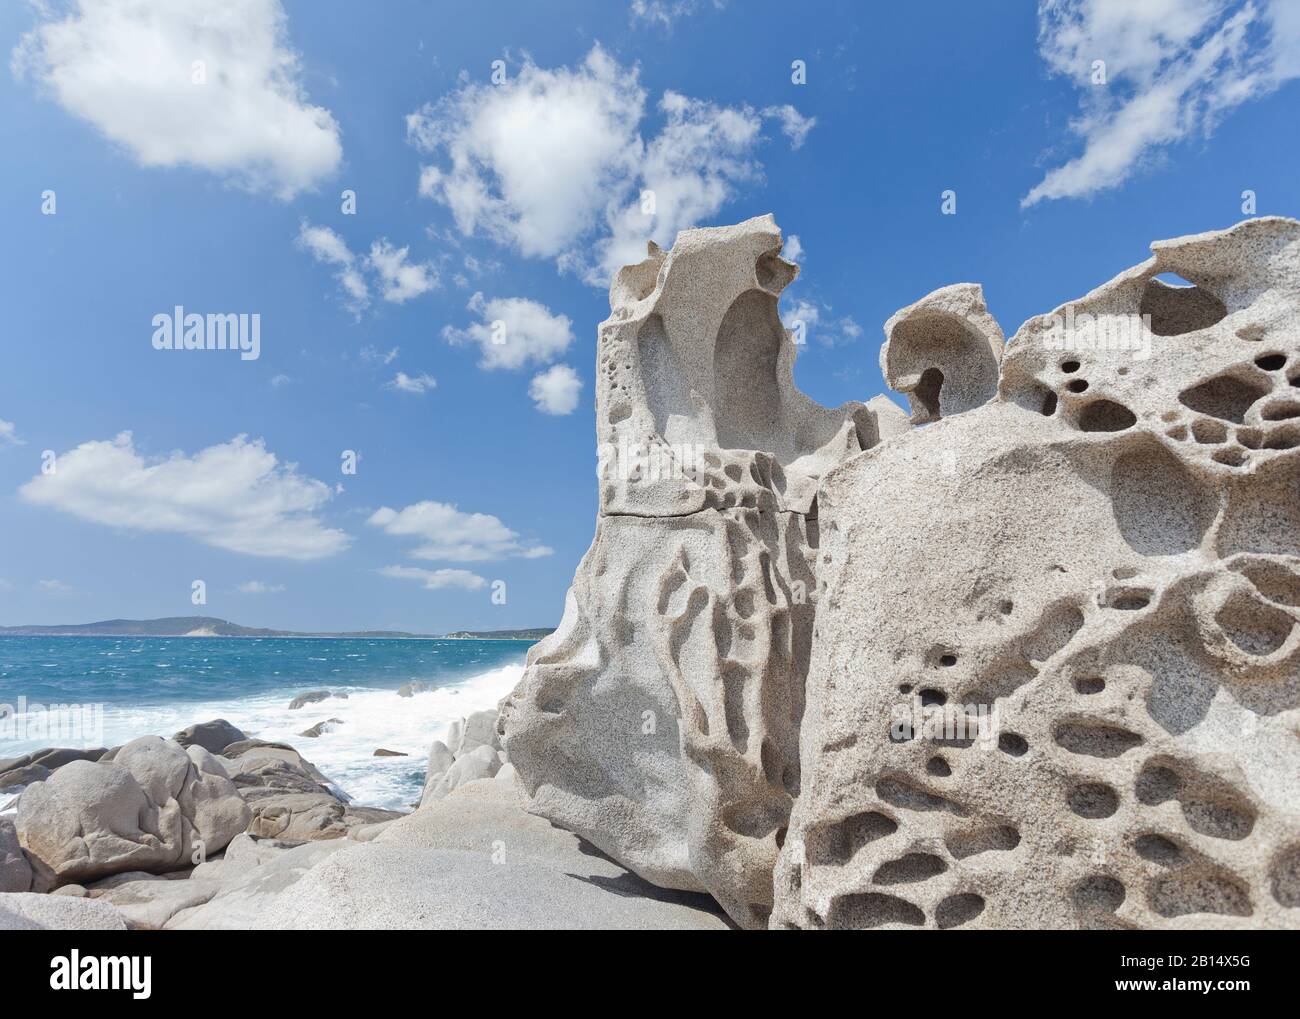 The beautiful sea of Sardinia island. Italy Stock Photo